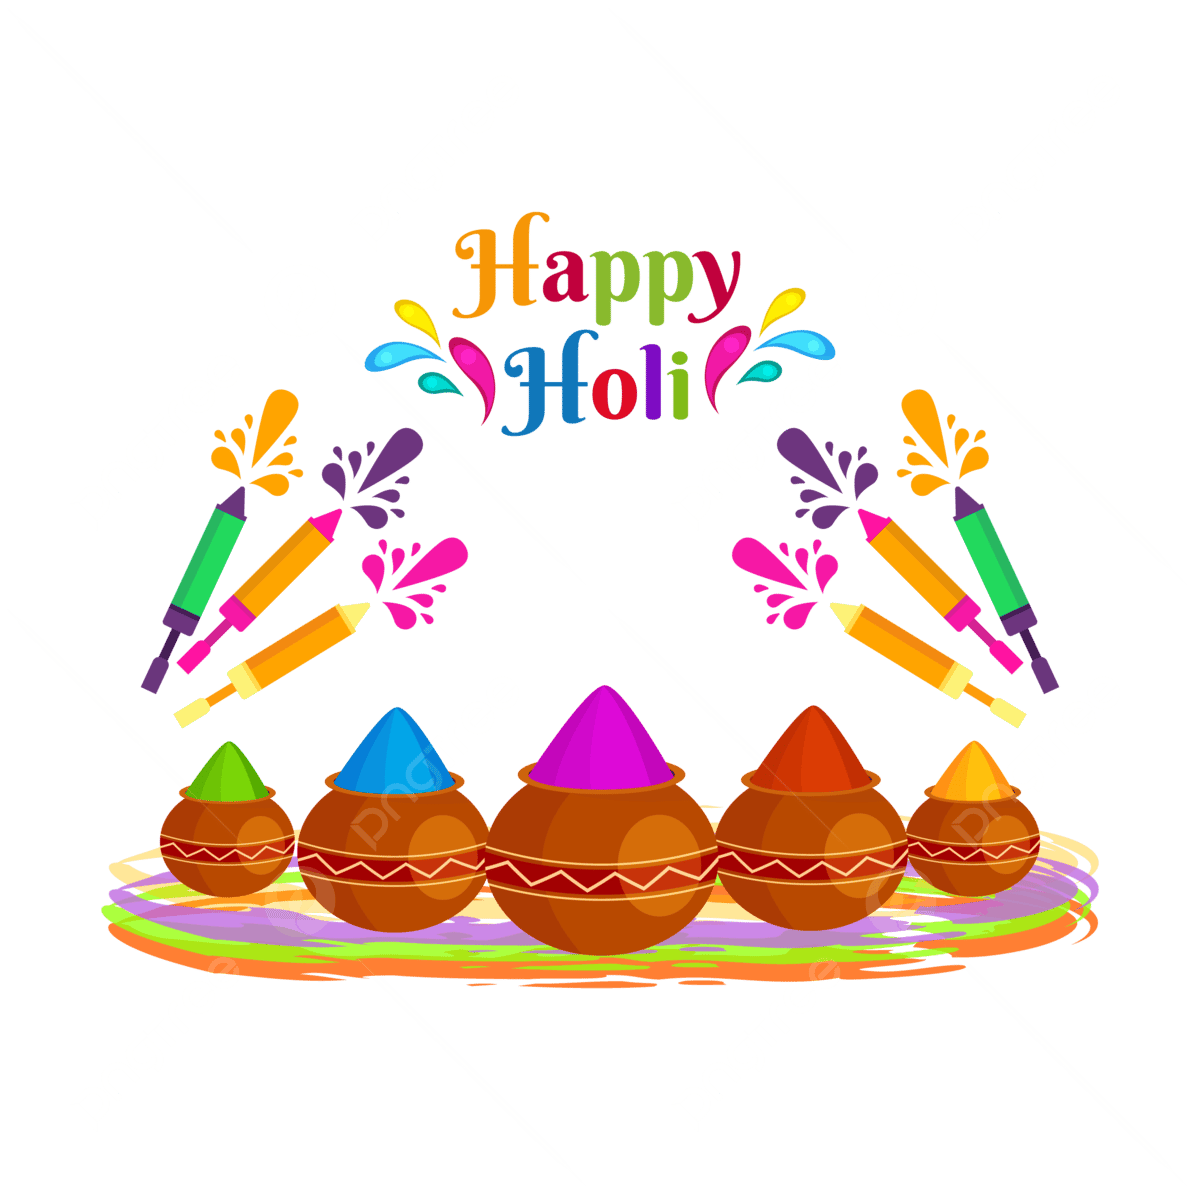 Wishing everyone A Very Happy, Prosperous, and Colorful Holi !!

#AsmcGhazipur #HappyHoli #Updgme #holifestivalofcolours @MeUPGovt #Meup